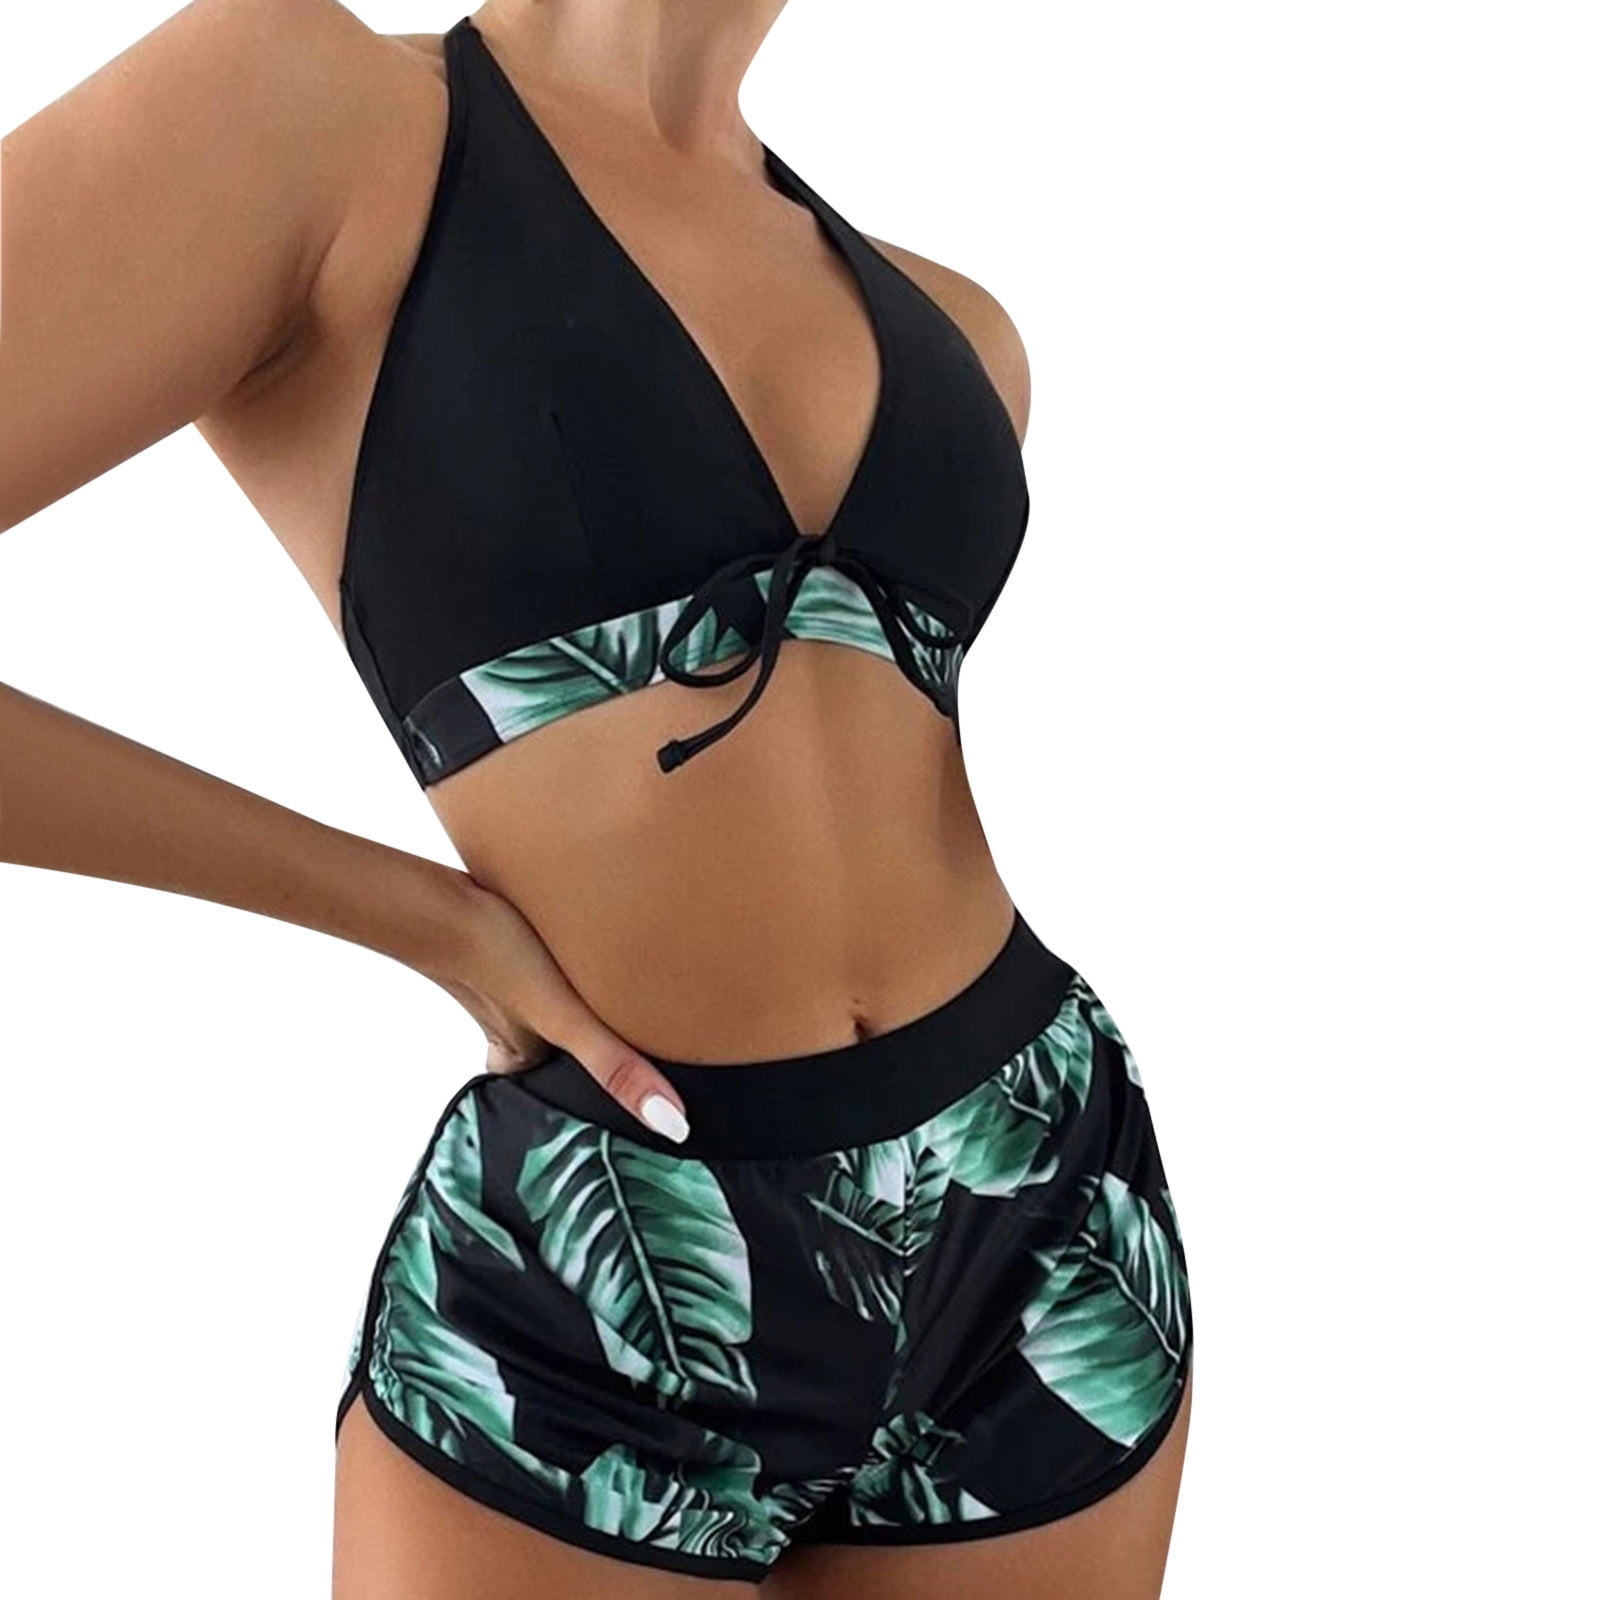 Bikini Sets Swimsuit for Women Fashion Color 3pack Tropical Print Halter With Swim Shorts Split Push Up Beachwear Swimwear Bathing Suit - Walmart.com